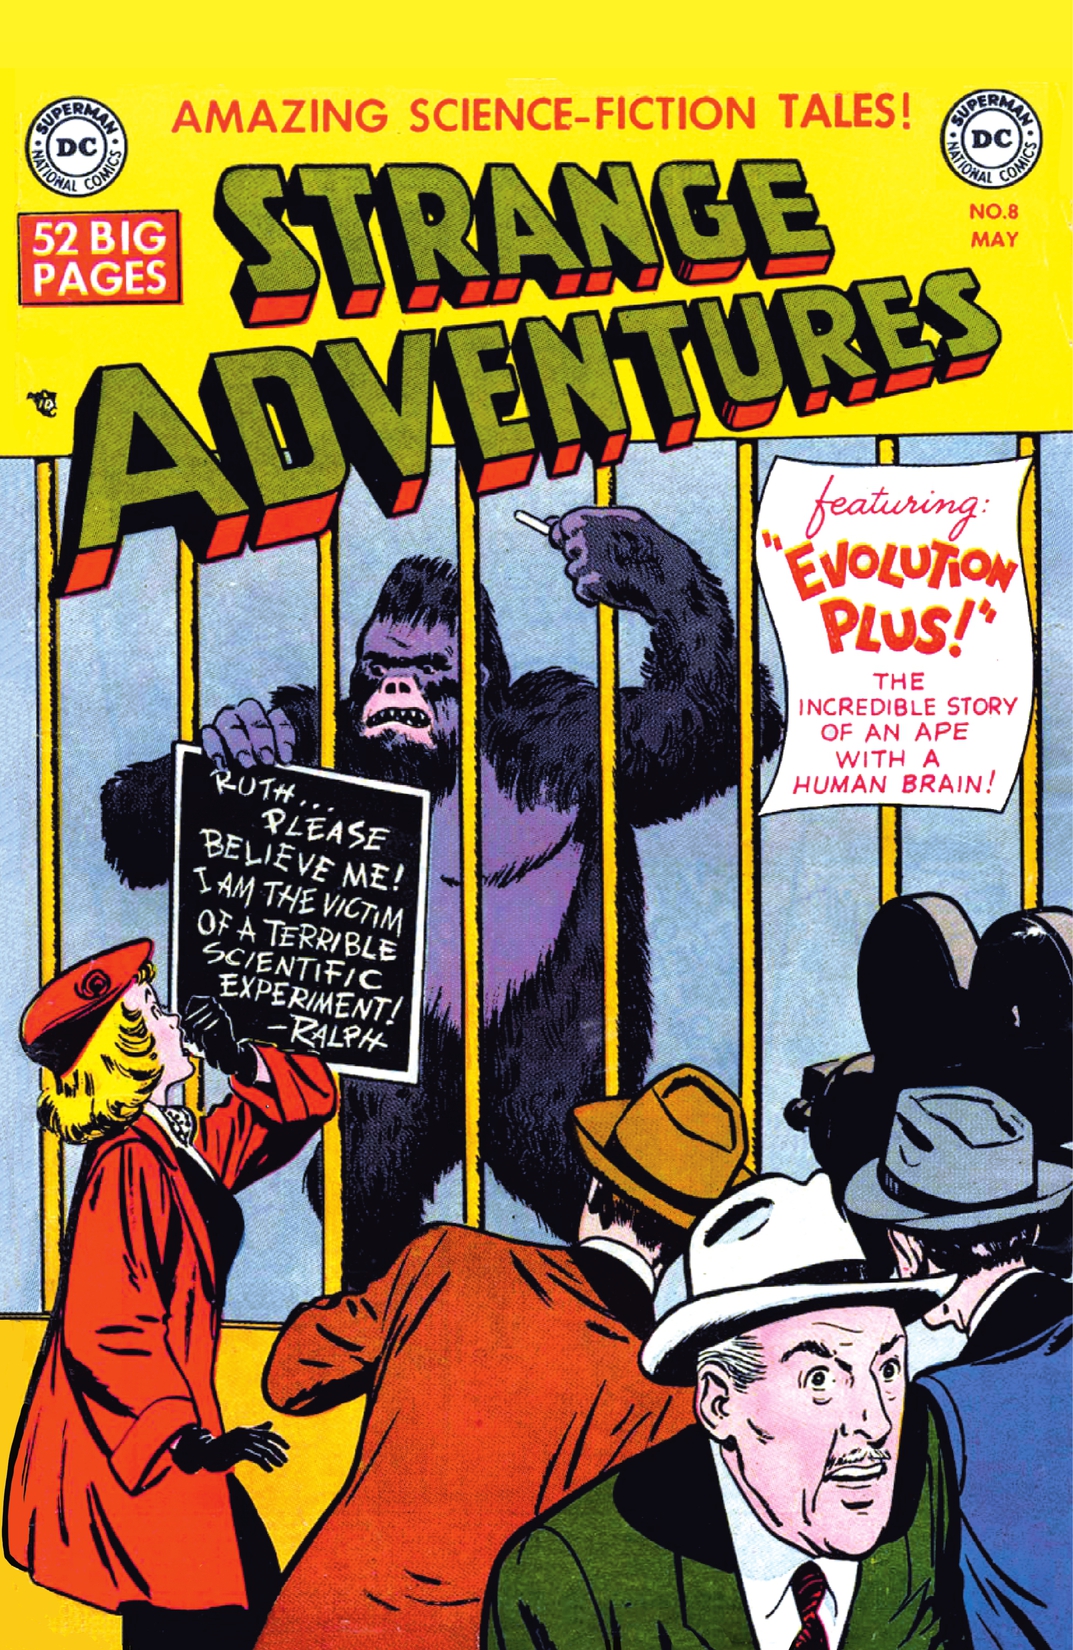 Strange Adventures (1950-1973) #8 preview images